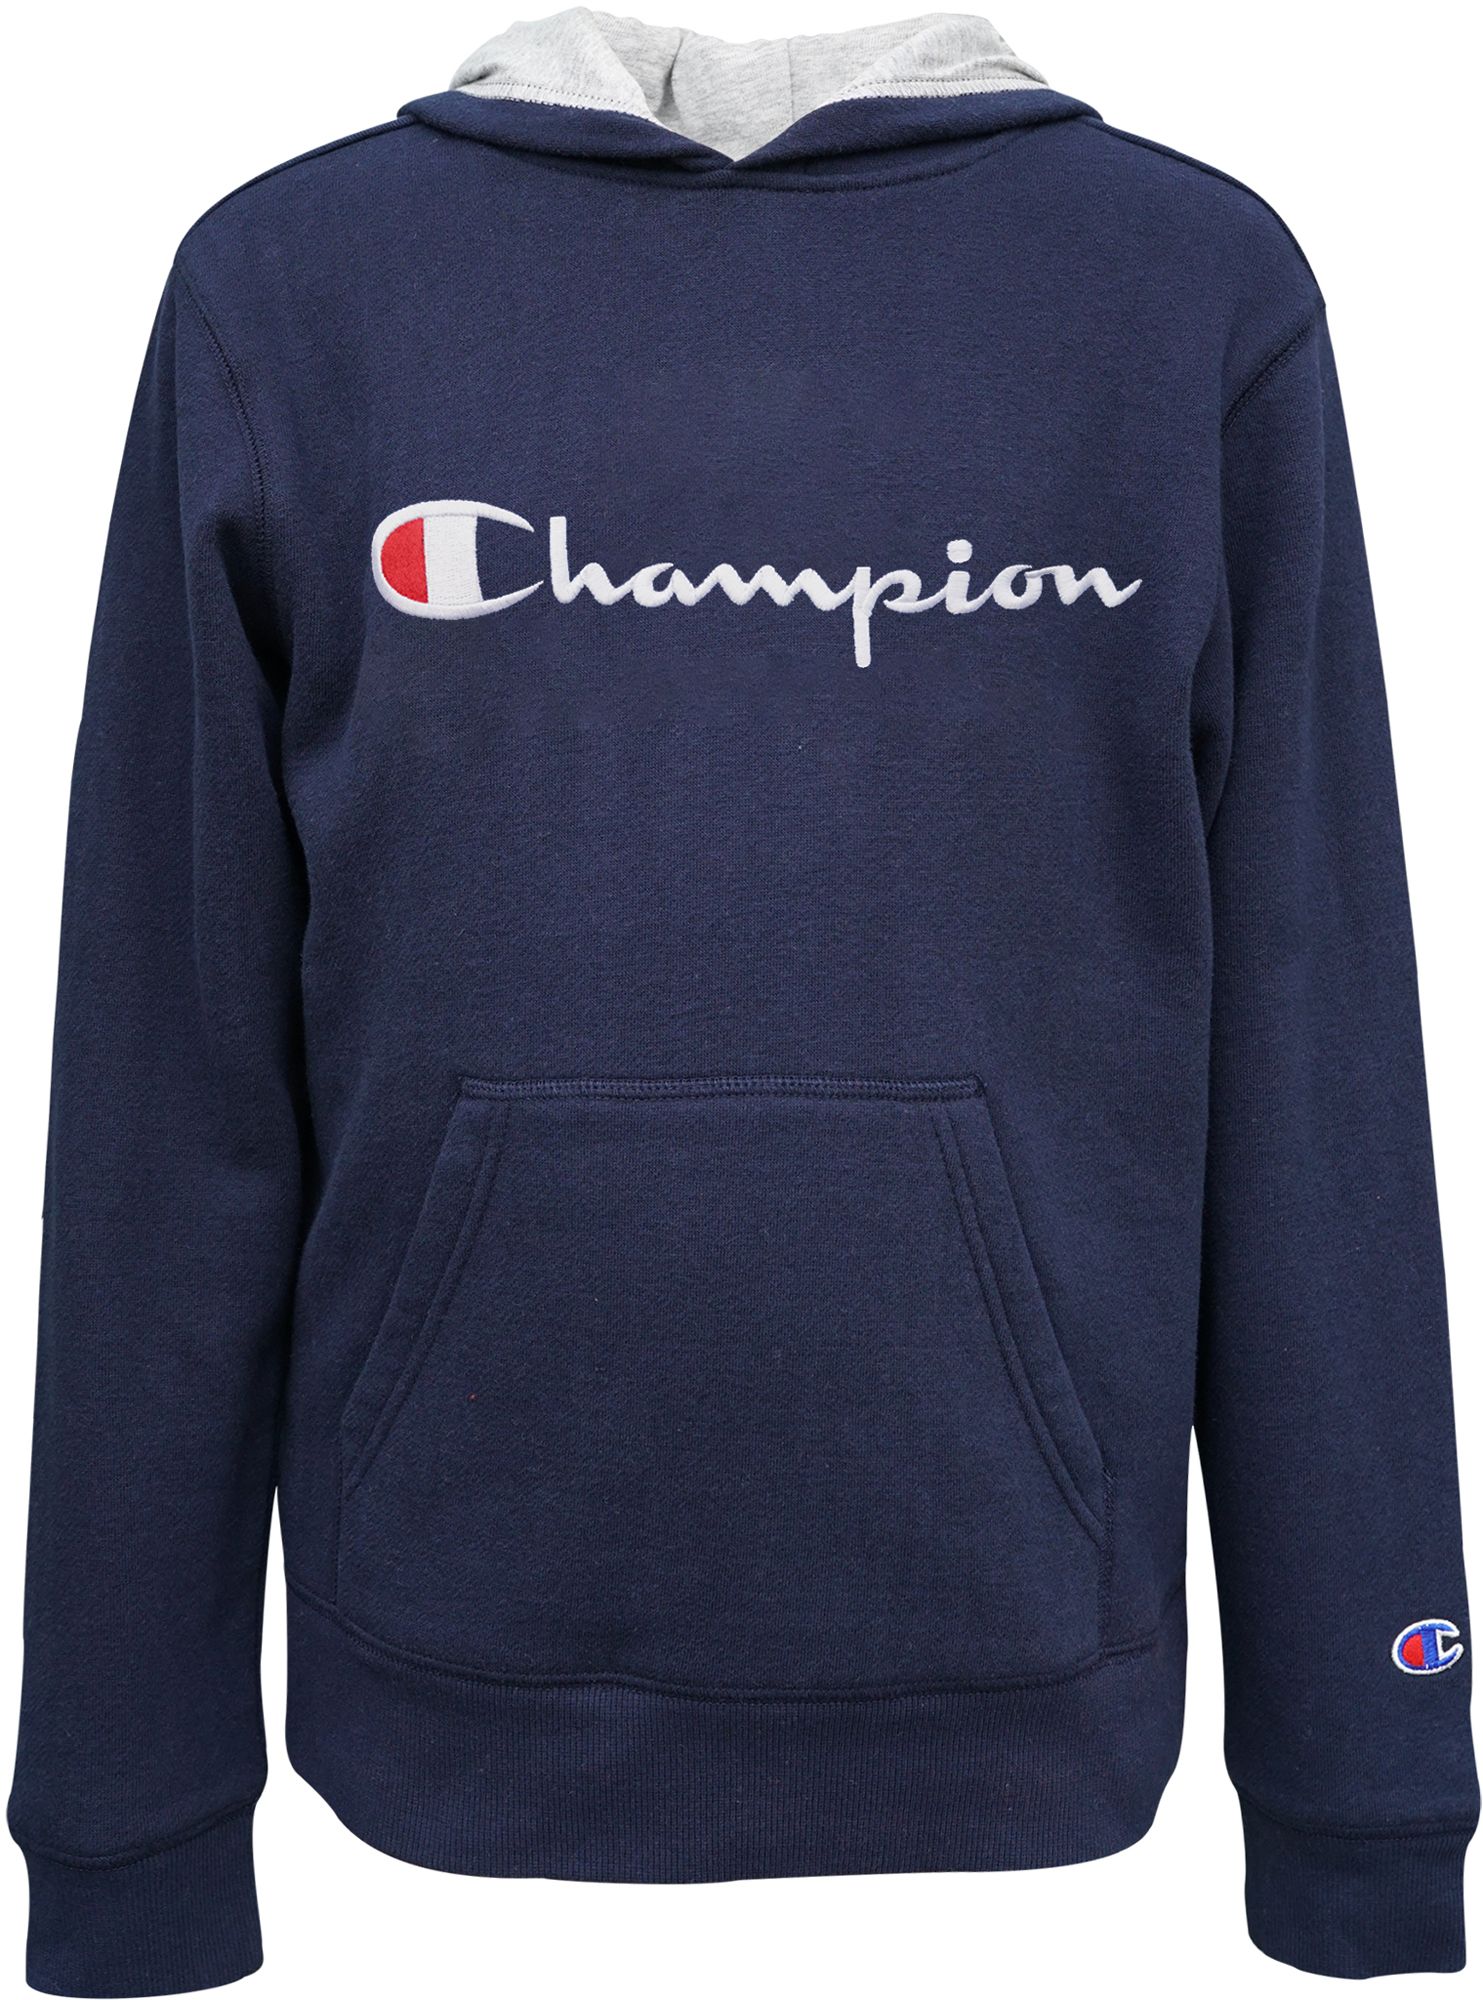 blue champions sweater